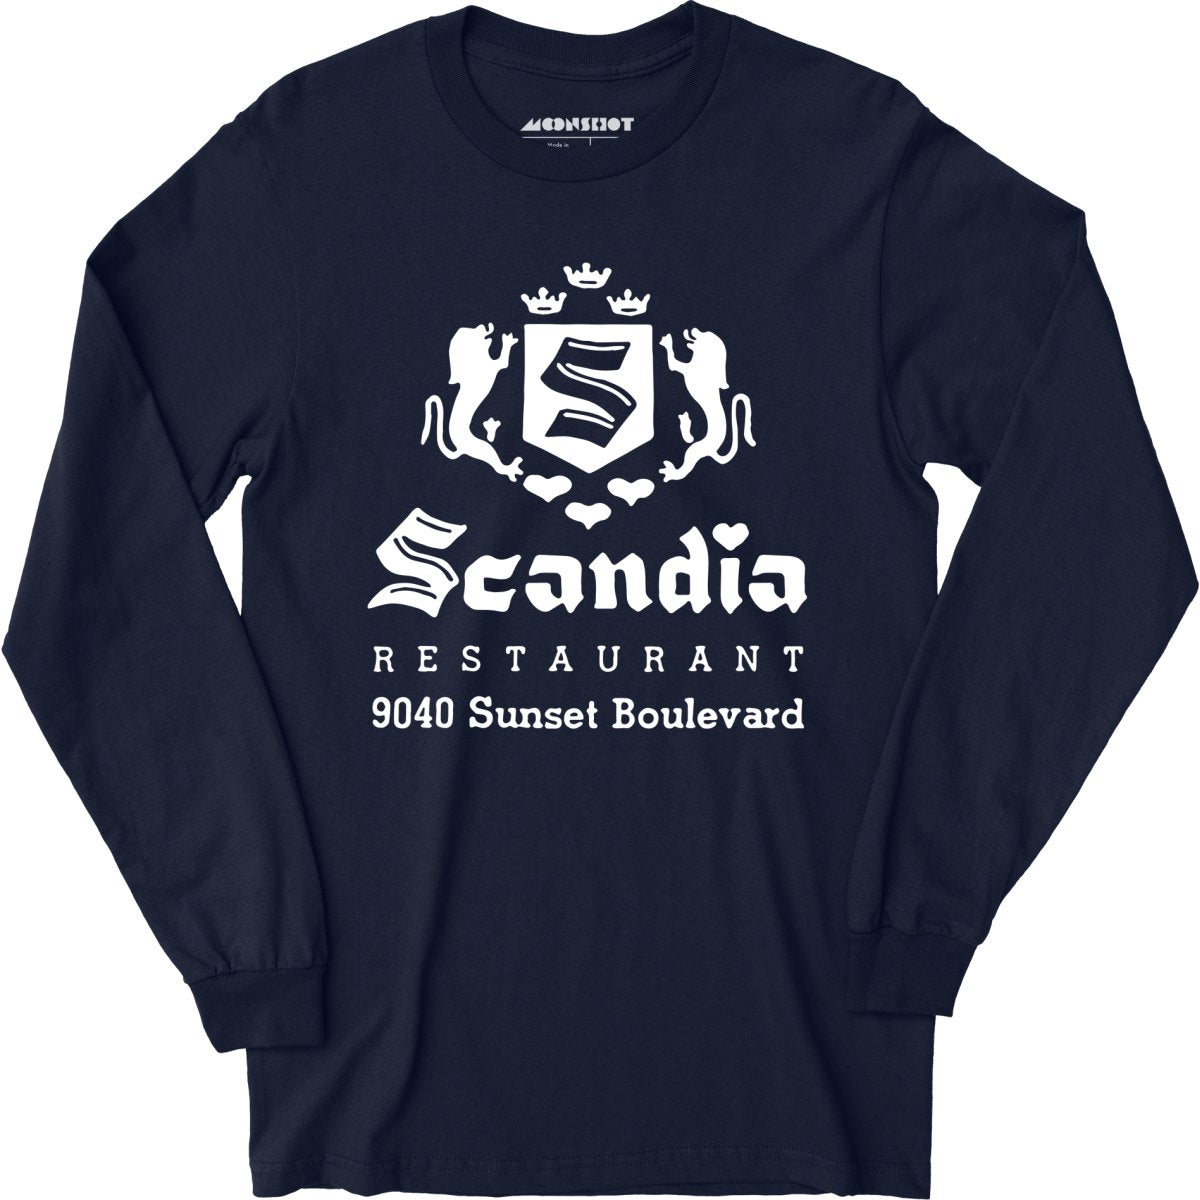 Scandia - West Hollywood, CA - Vintage Restaurant - Long Sleeve T-Shirt